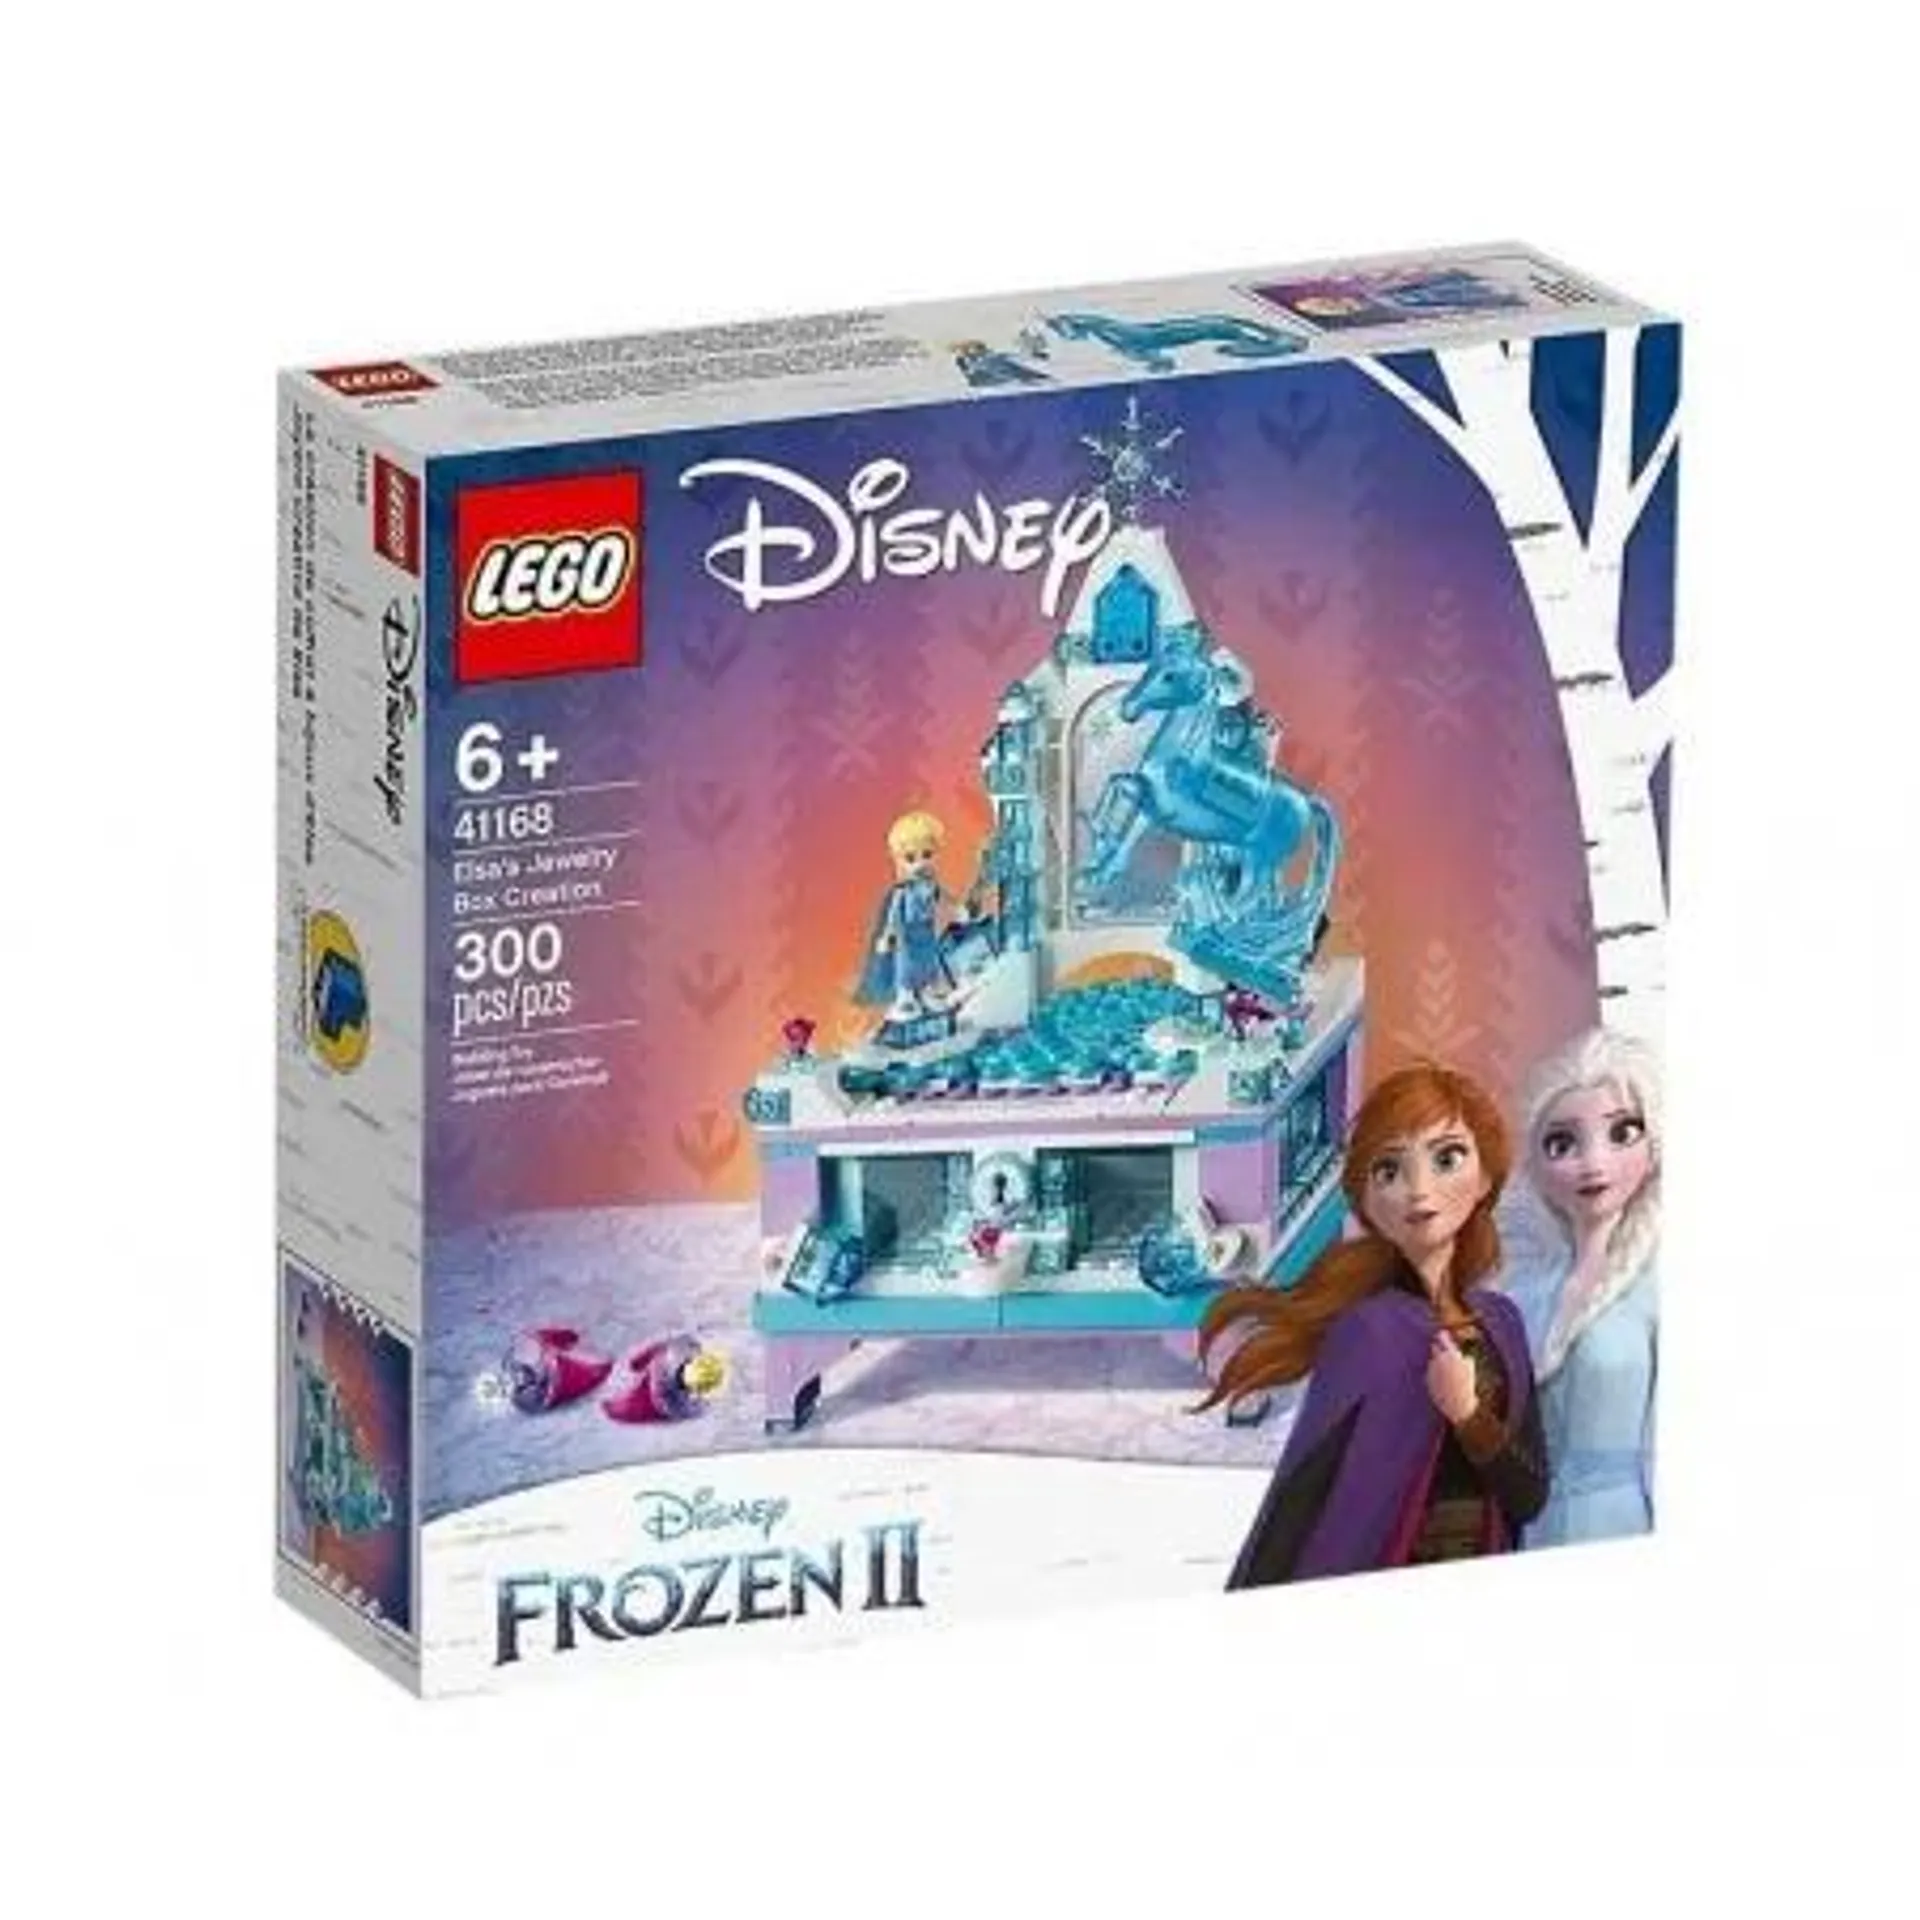 Caixa de joias criativa da Lego Disney Elsa